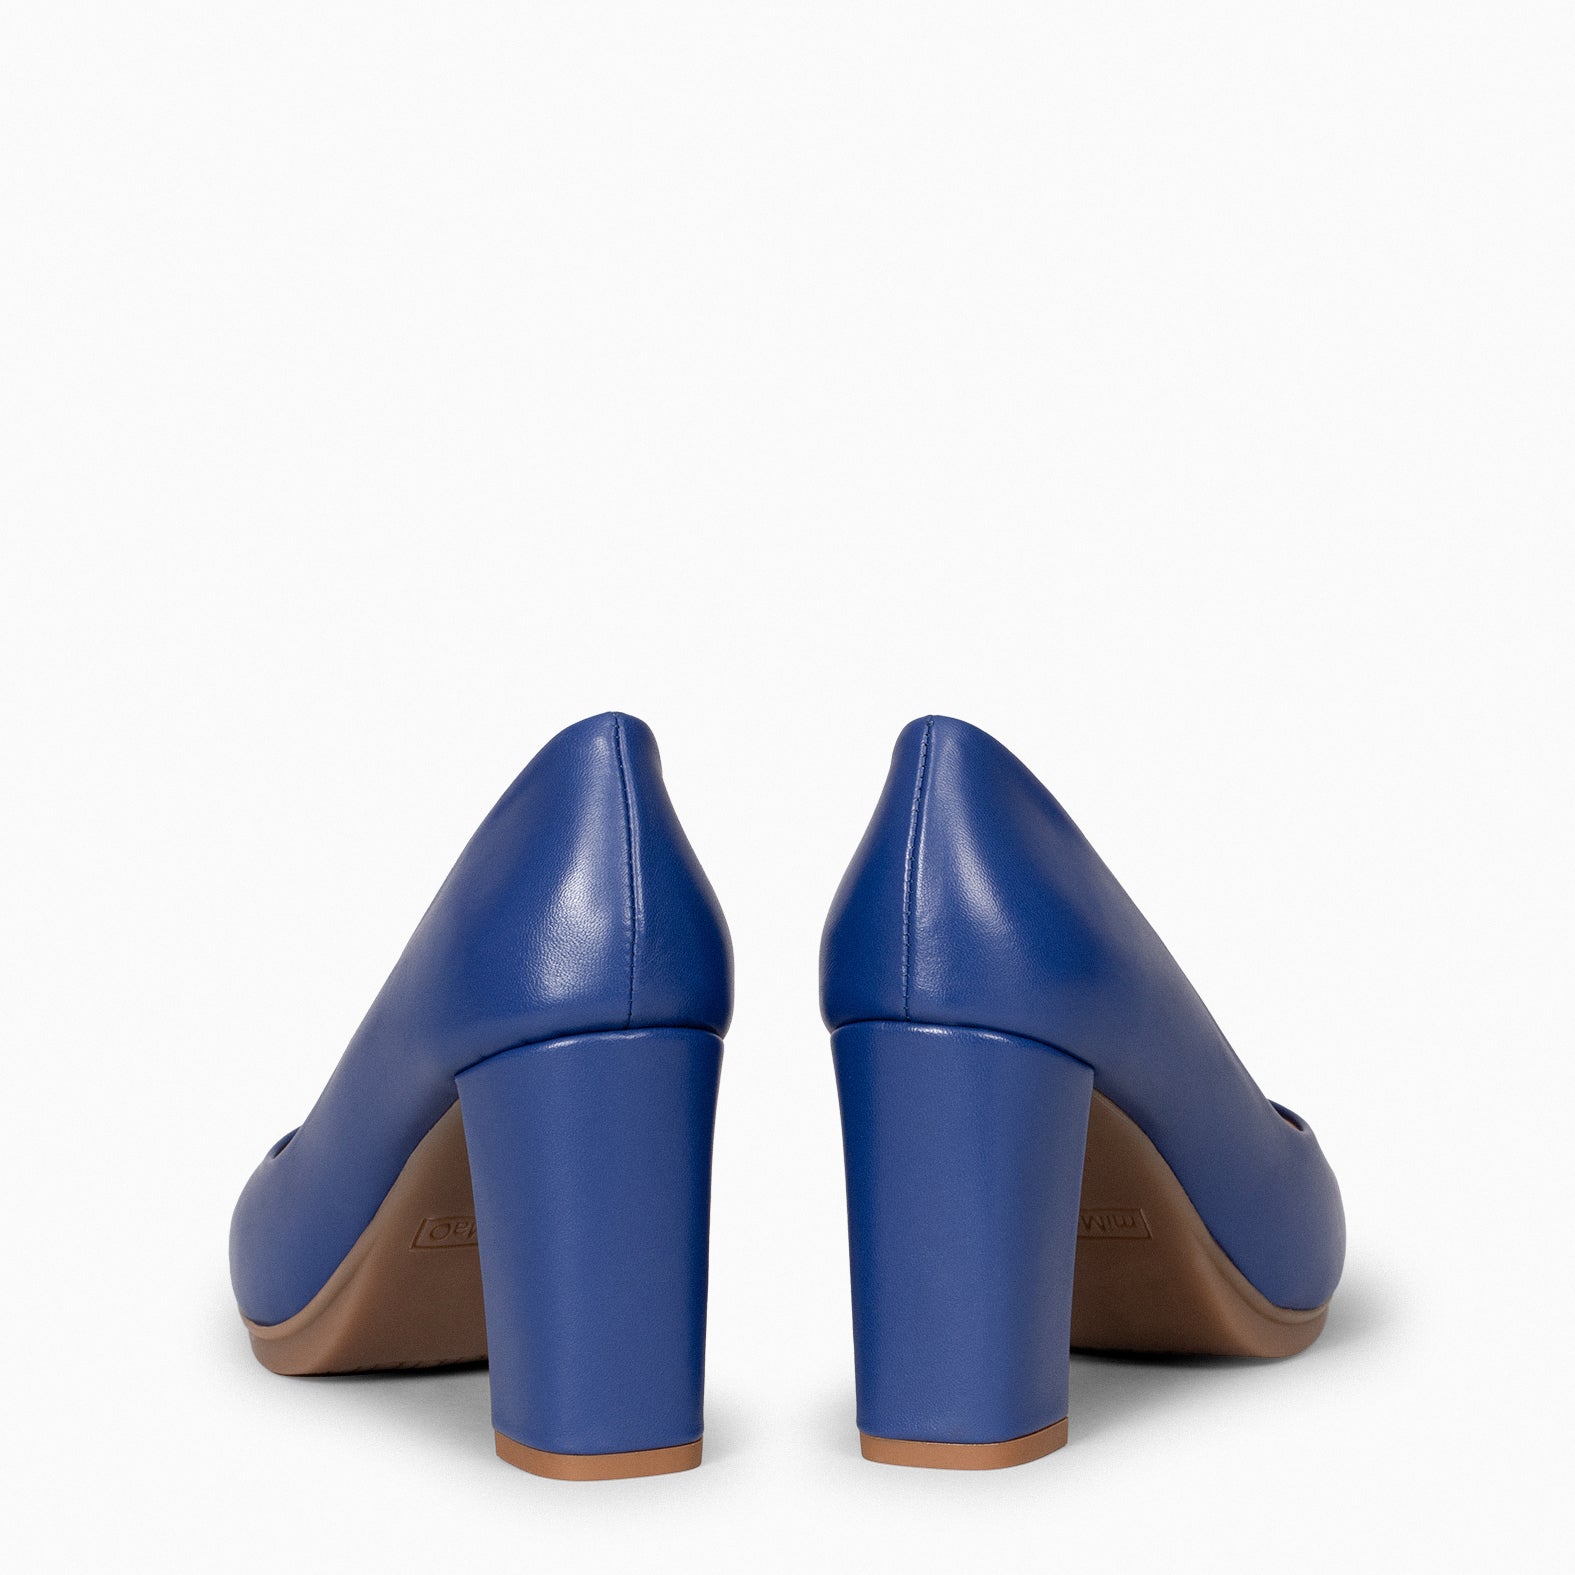 URBAN SALON – ELECTRIC BLUE nappa leather high heel